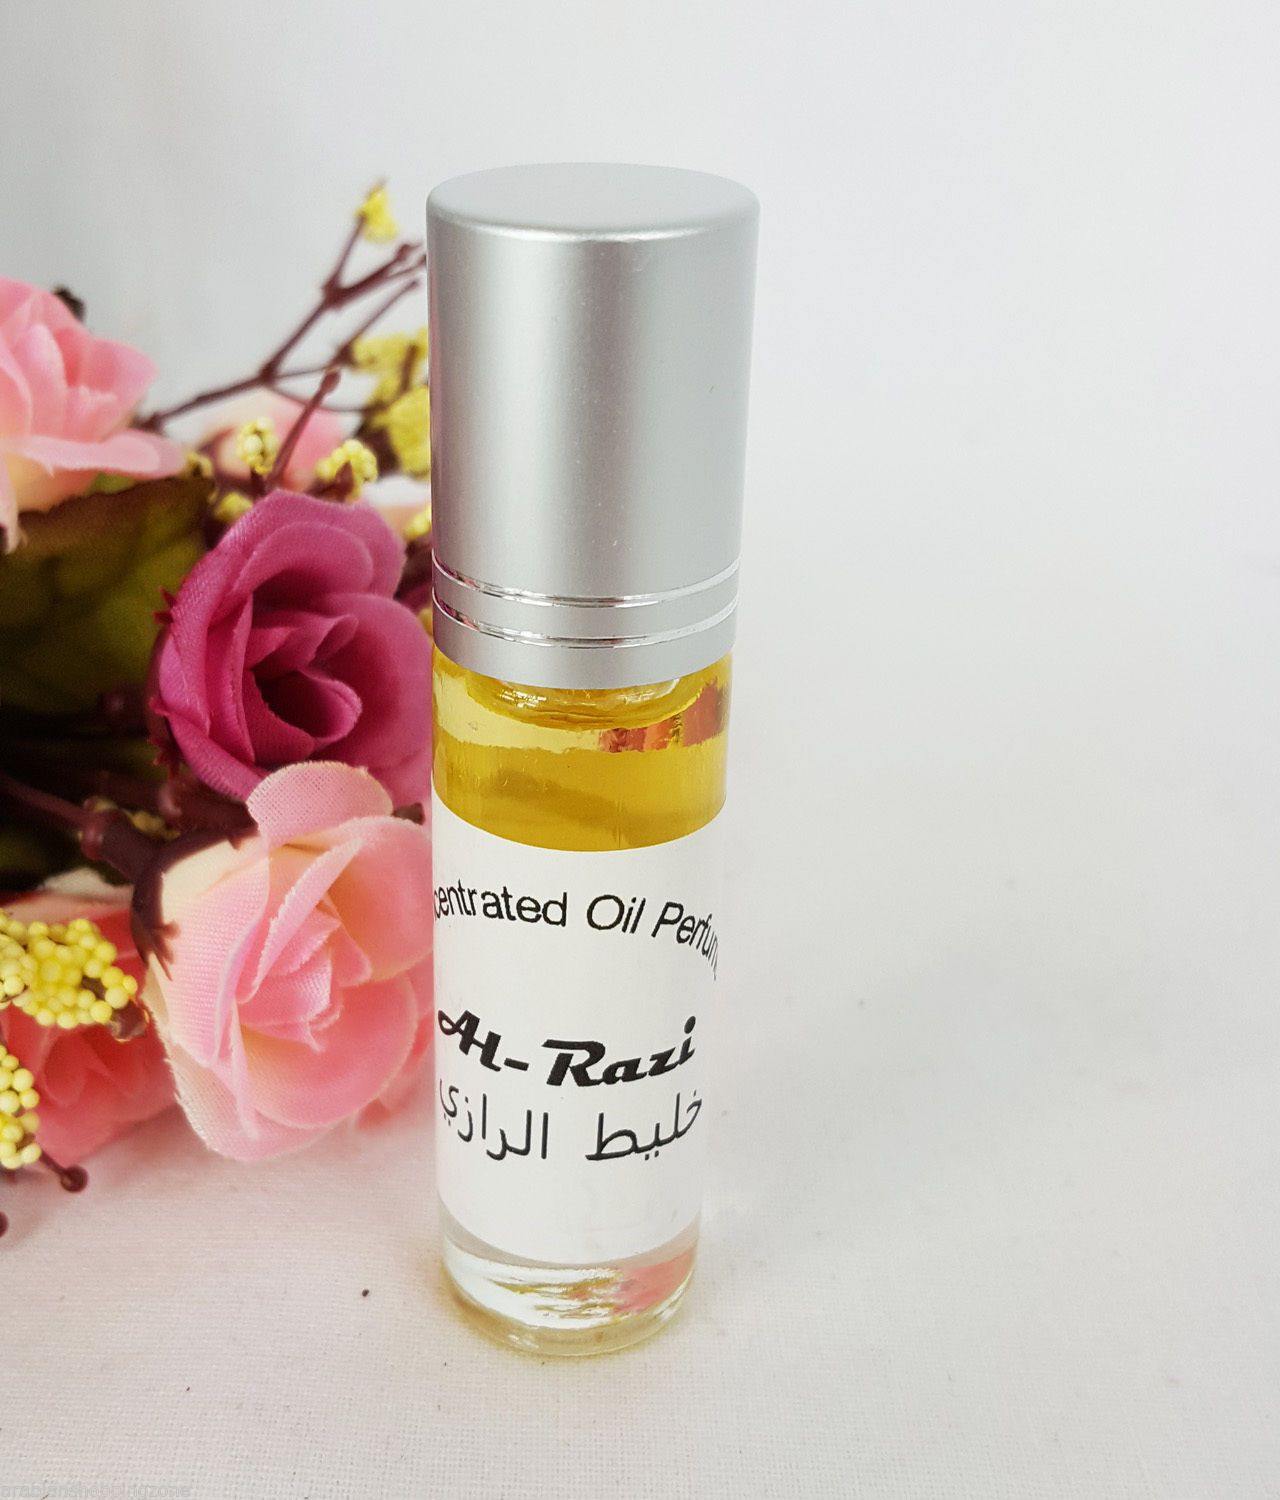 AL-Razi 6ml Grade A Concentrated Perfume Oil Attar Parfüm Parfum Parfümöl - Islamic Shop